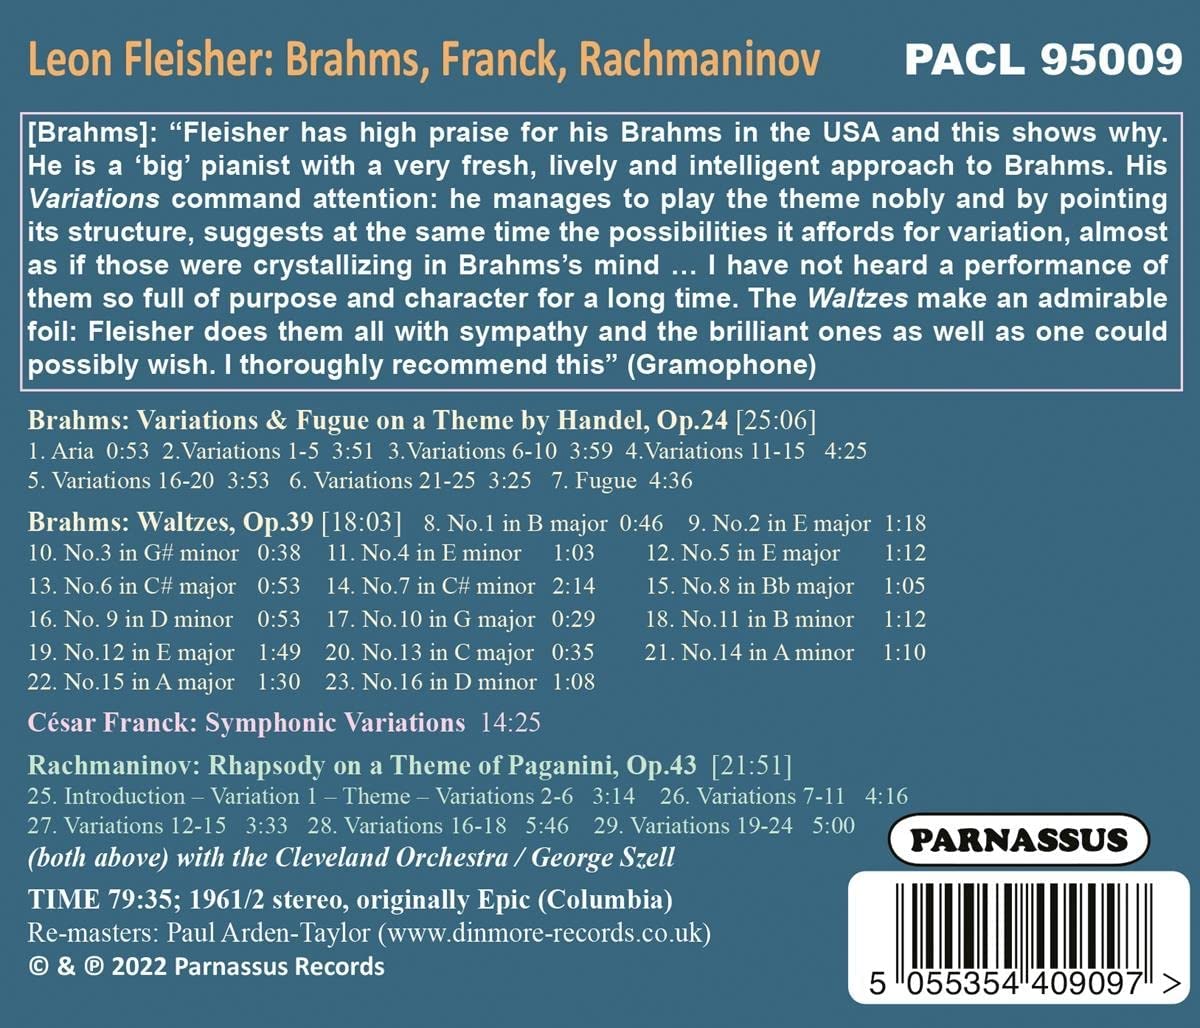 Leon Fleisher 브람스: 왈츠, 변주곡과 푸가 / 프랑크: 교향적 변주곡 / 라흐마니노프: 파가니니 랩소디 (plays Brahms, Franck, Rachmaninov)